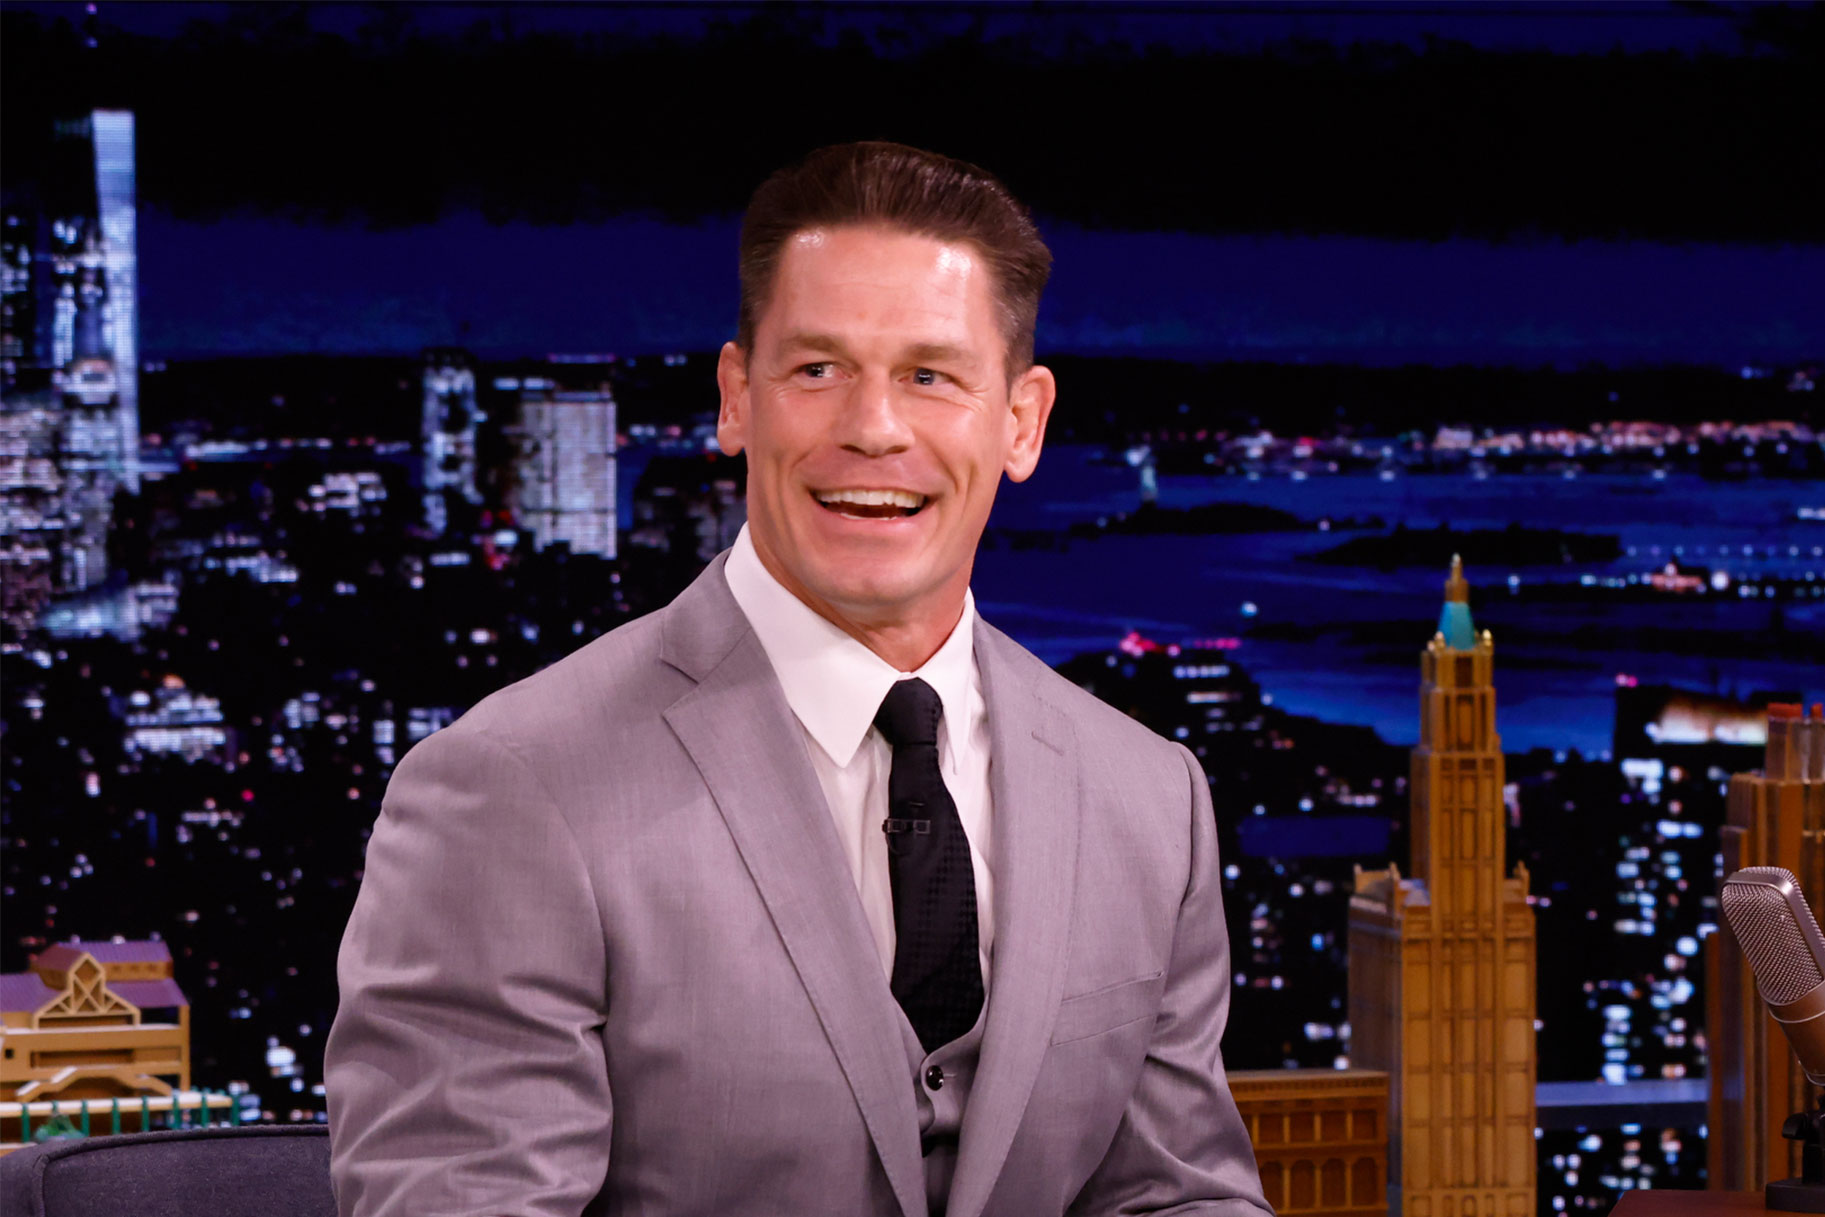 John Cena smiling while wearing a gray suit